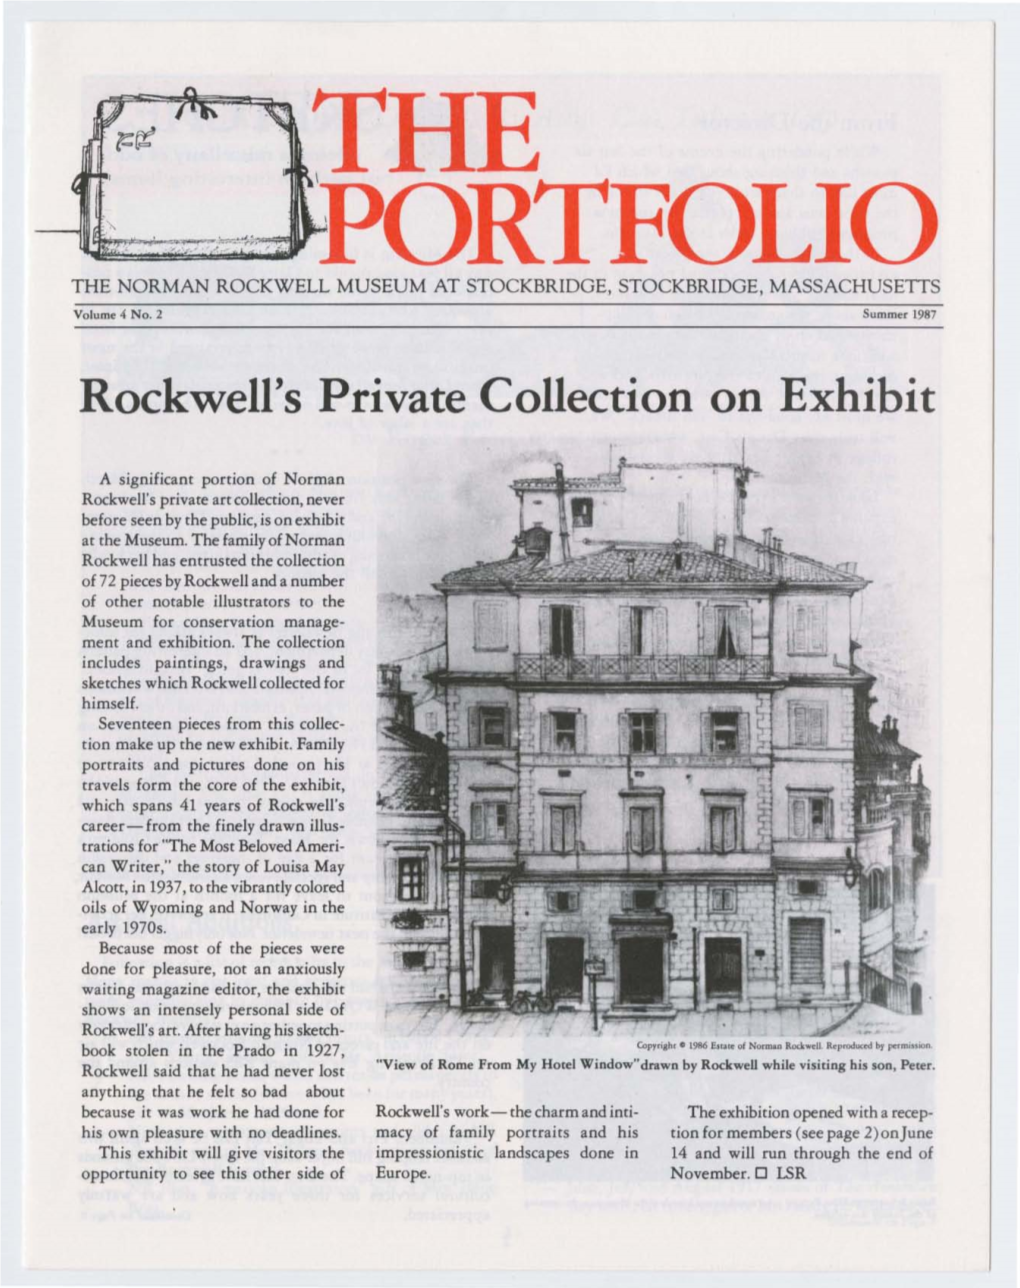 ~~~'\PORTFOLIO the NORMAN ROCKWELL MUSEUM at STOCKBRIDGE, STOCKBRIDGE, MASSACHUSETTS Volume 4 No.2 Summer 1987